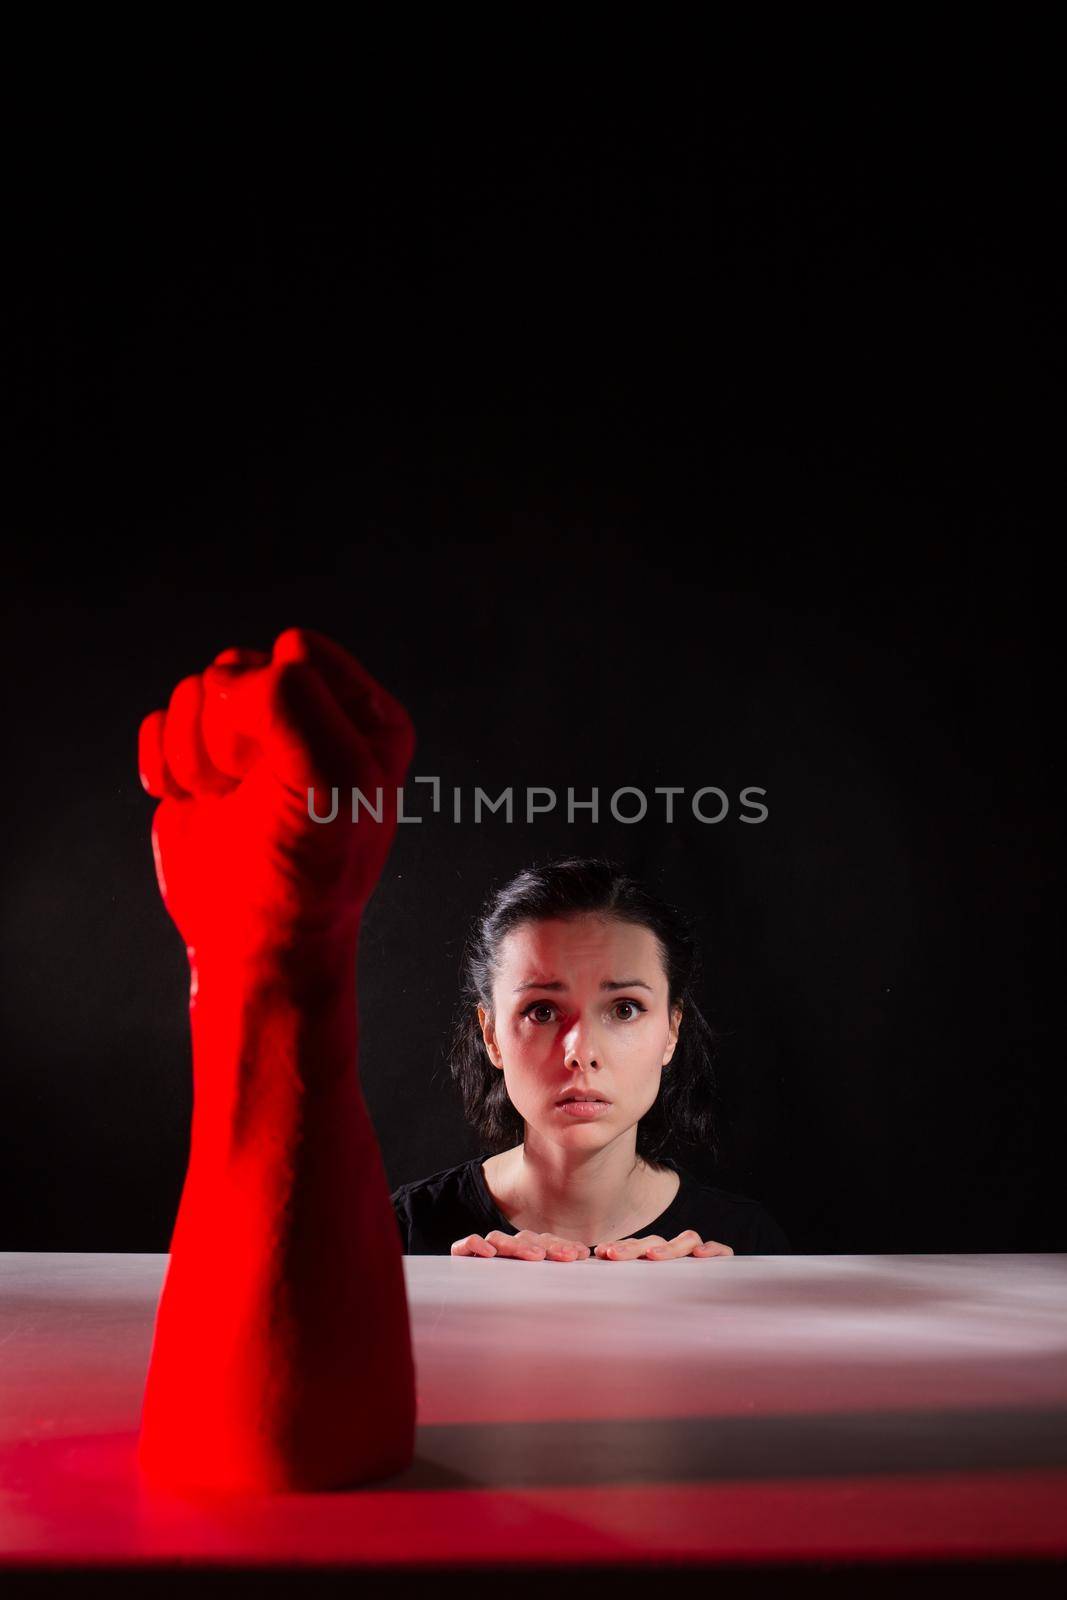 woman afraid of red hand, symbol of dictatorship, black background by shilovskaya